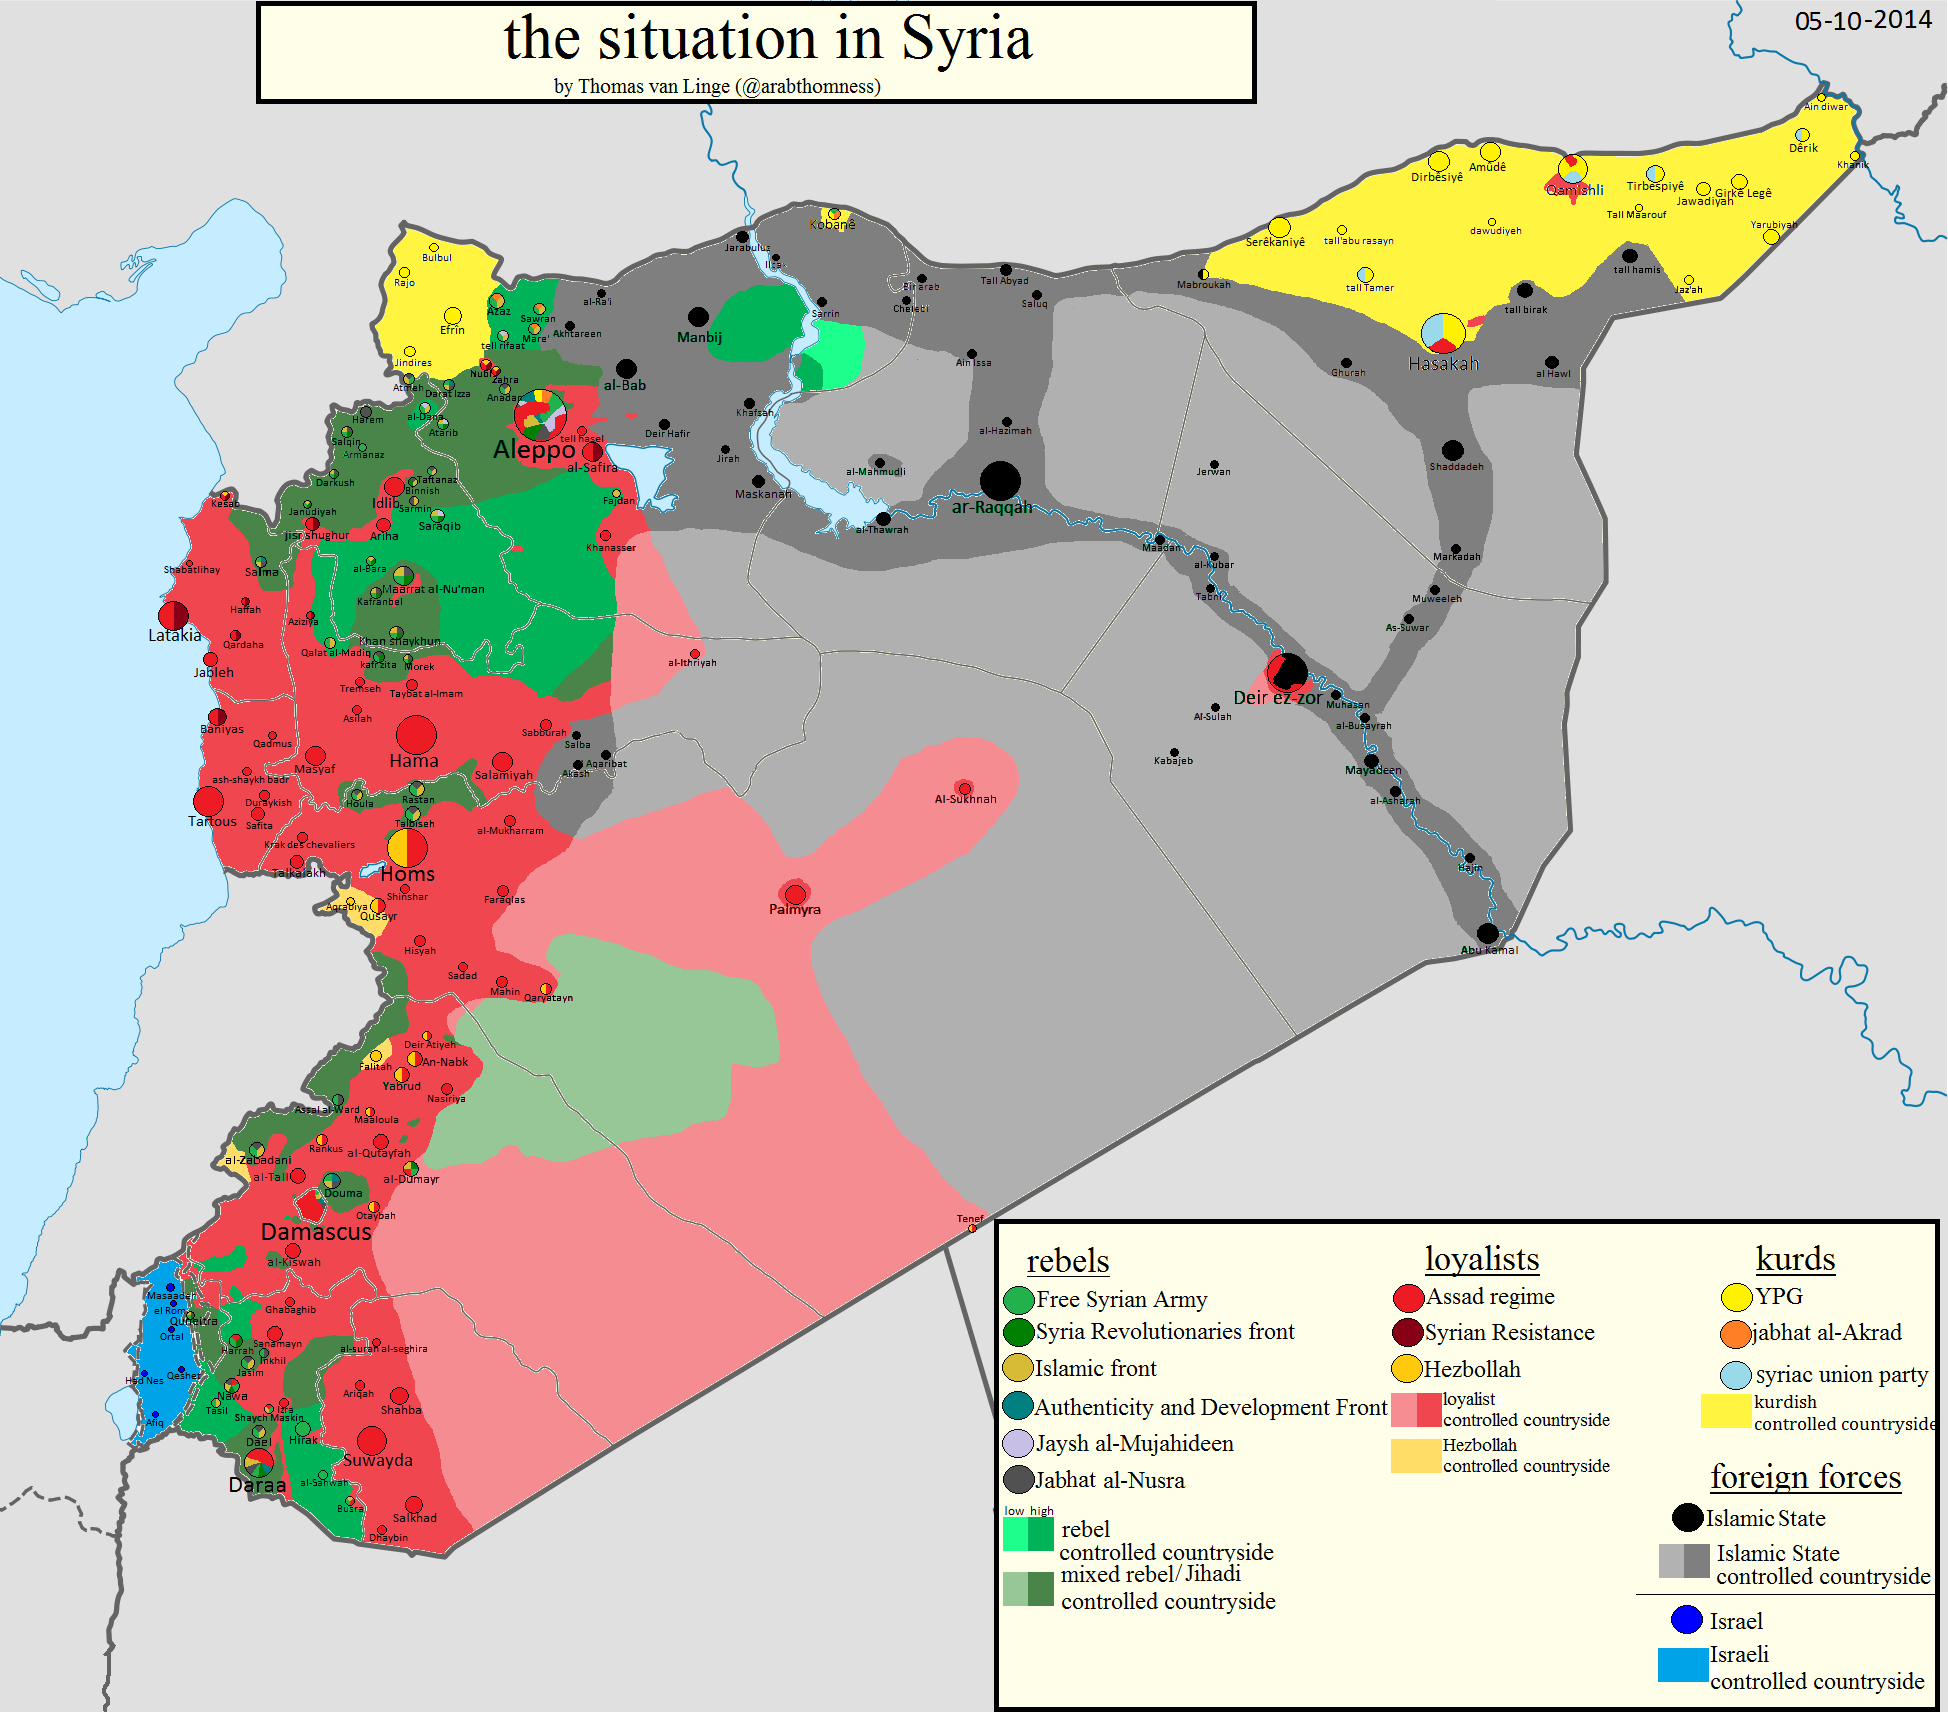 http://www.les-crises.fr/wp-content/uploads/2015/10/24-syrie-10-2014.png